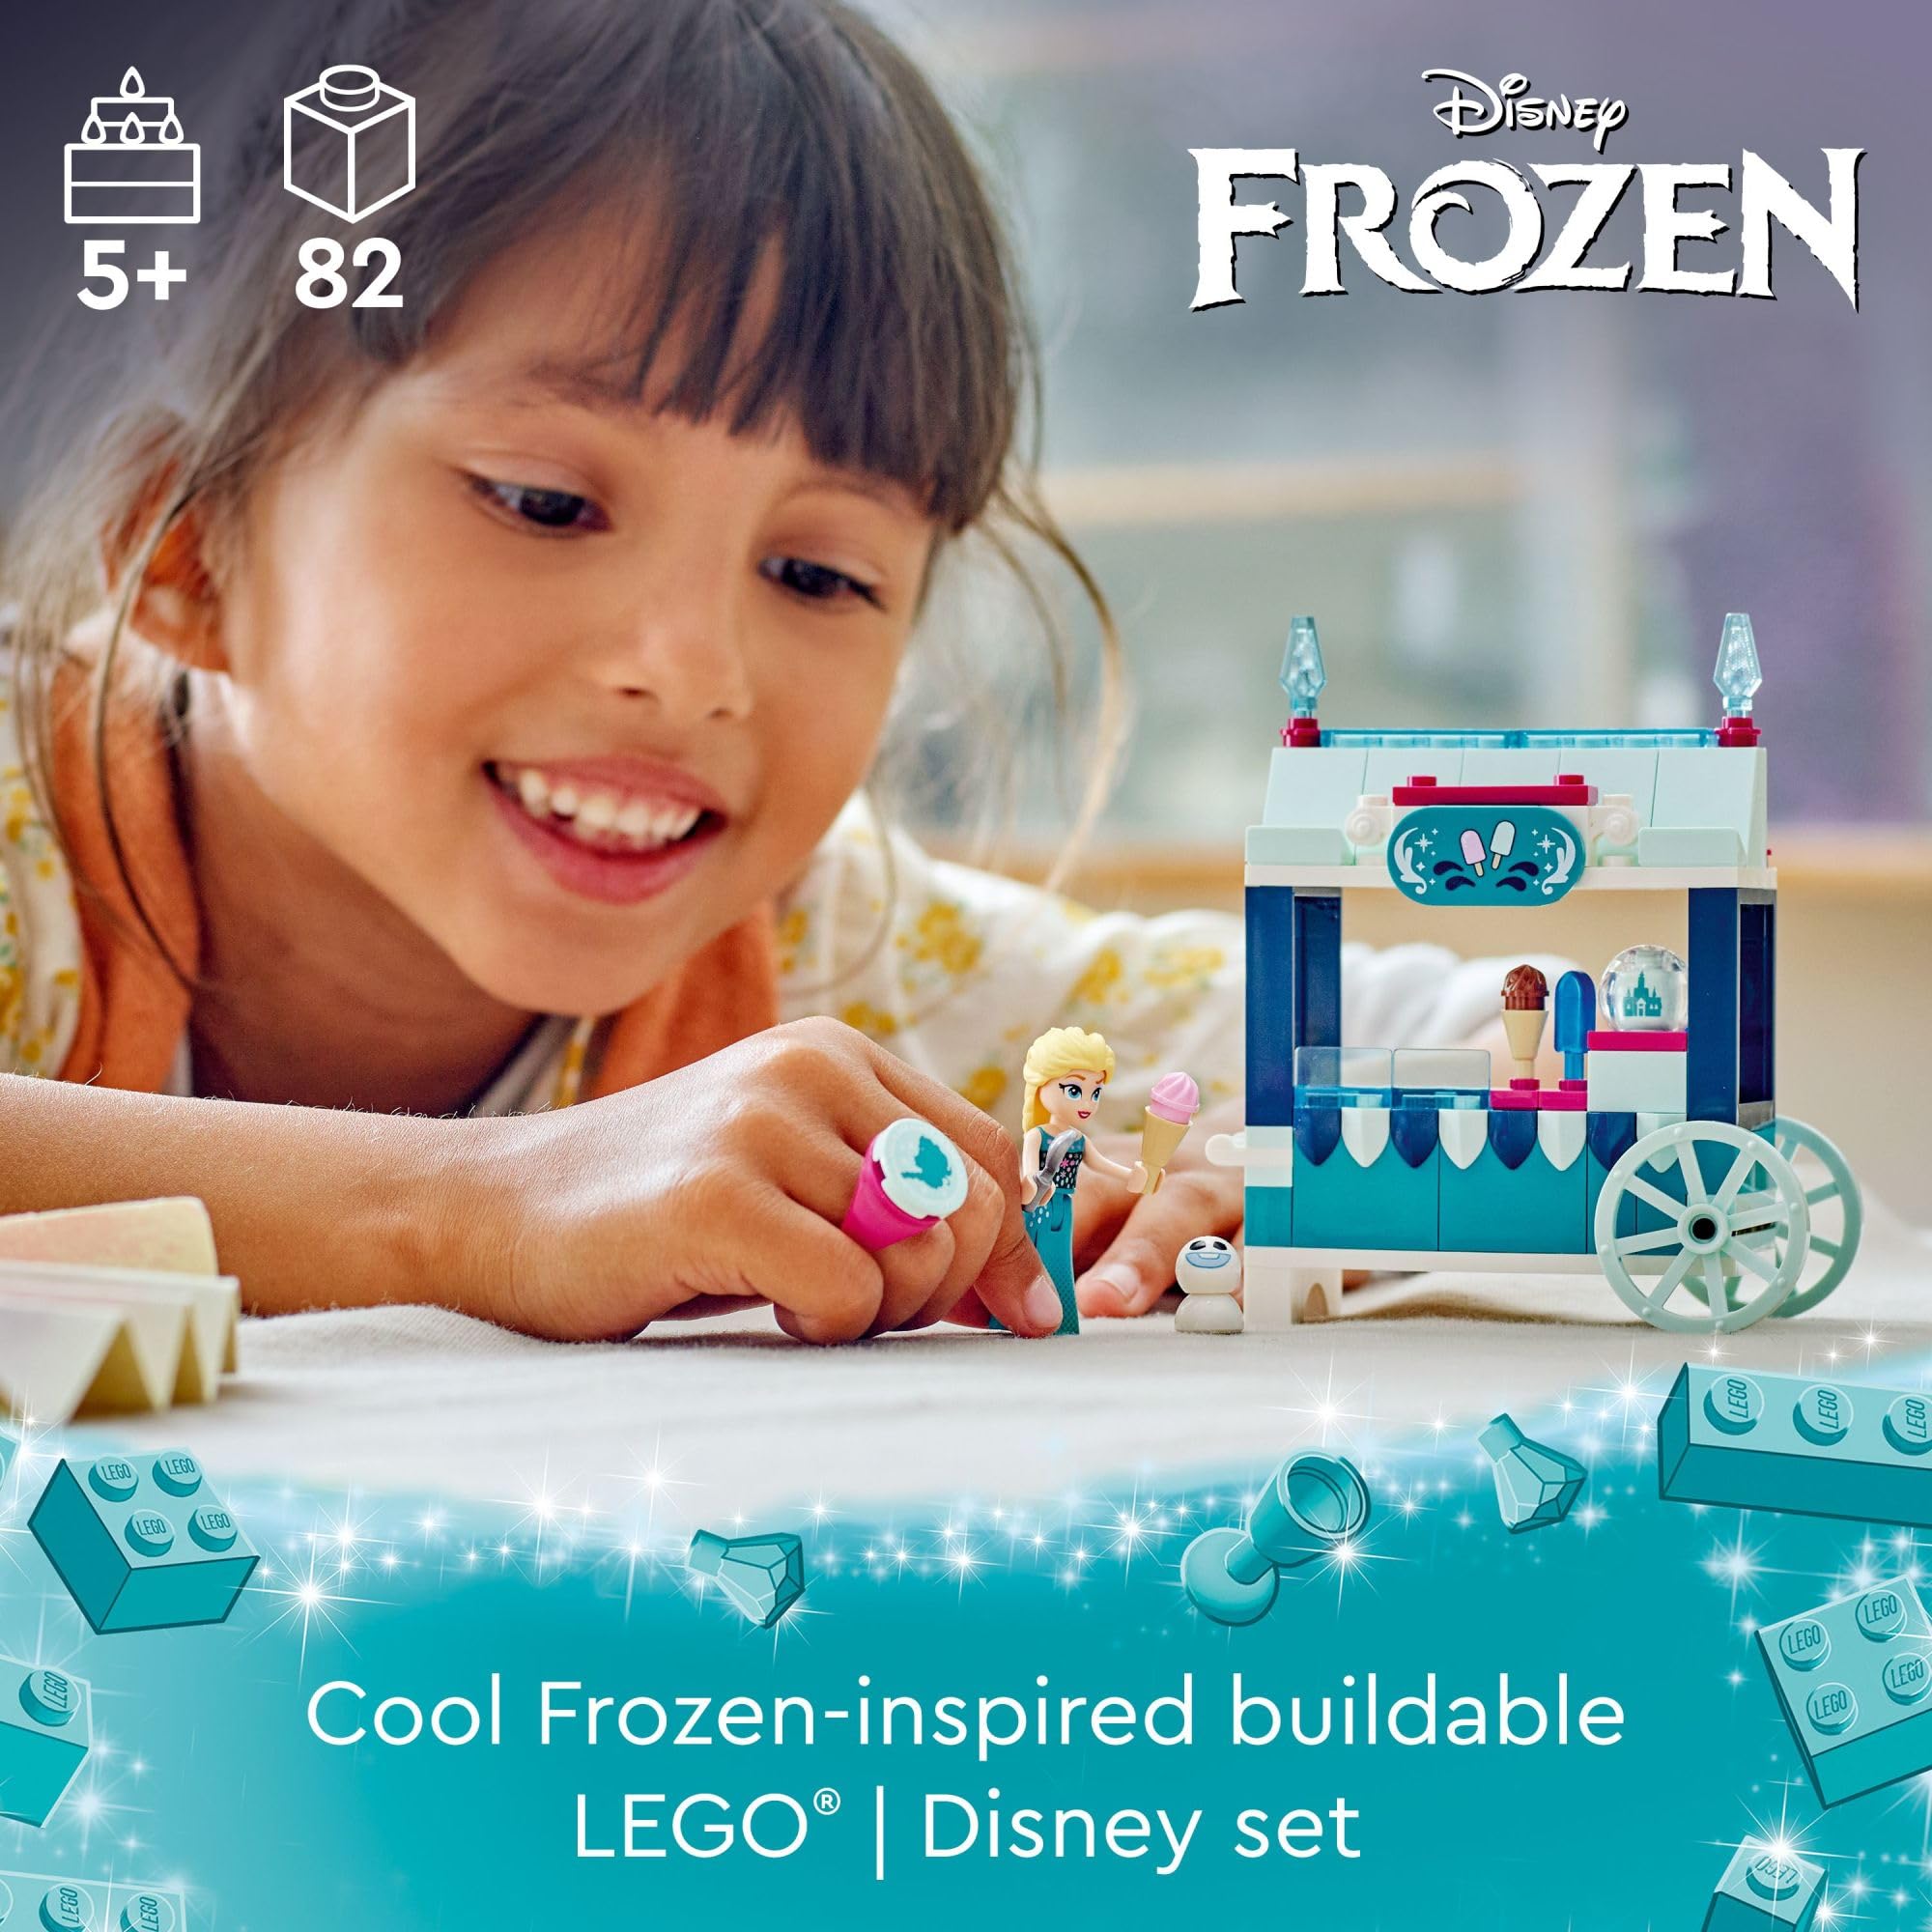 LEGO Disney Frozen Elsa’s Frozen Treats Building Set, Includes Elsa Mini-Doll and a Snowgie Figure, Elsa Toy Makes a Fun Gift for Girls and Boys who Love Frozen Toys, Disney Princess Doll, 43234